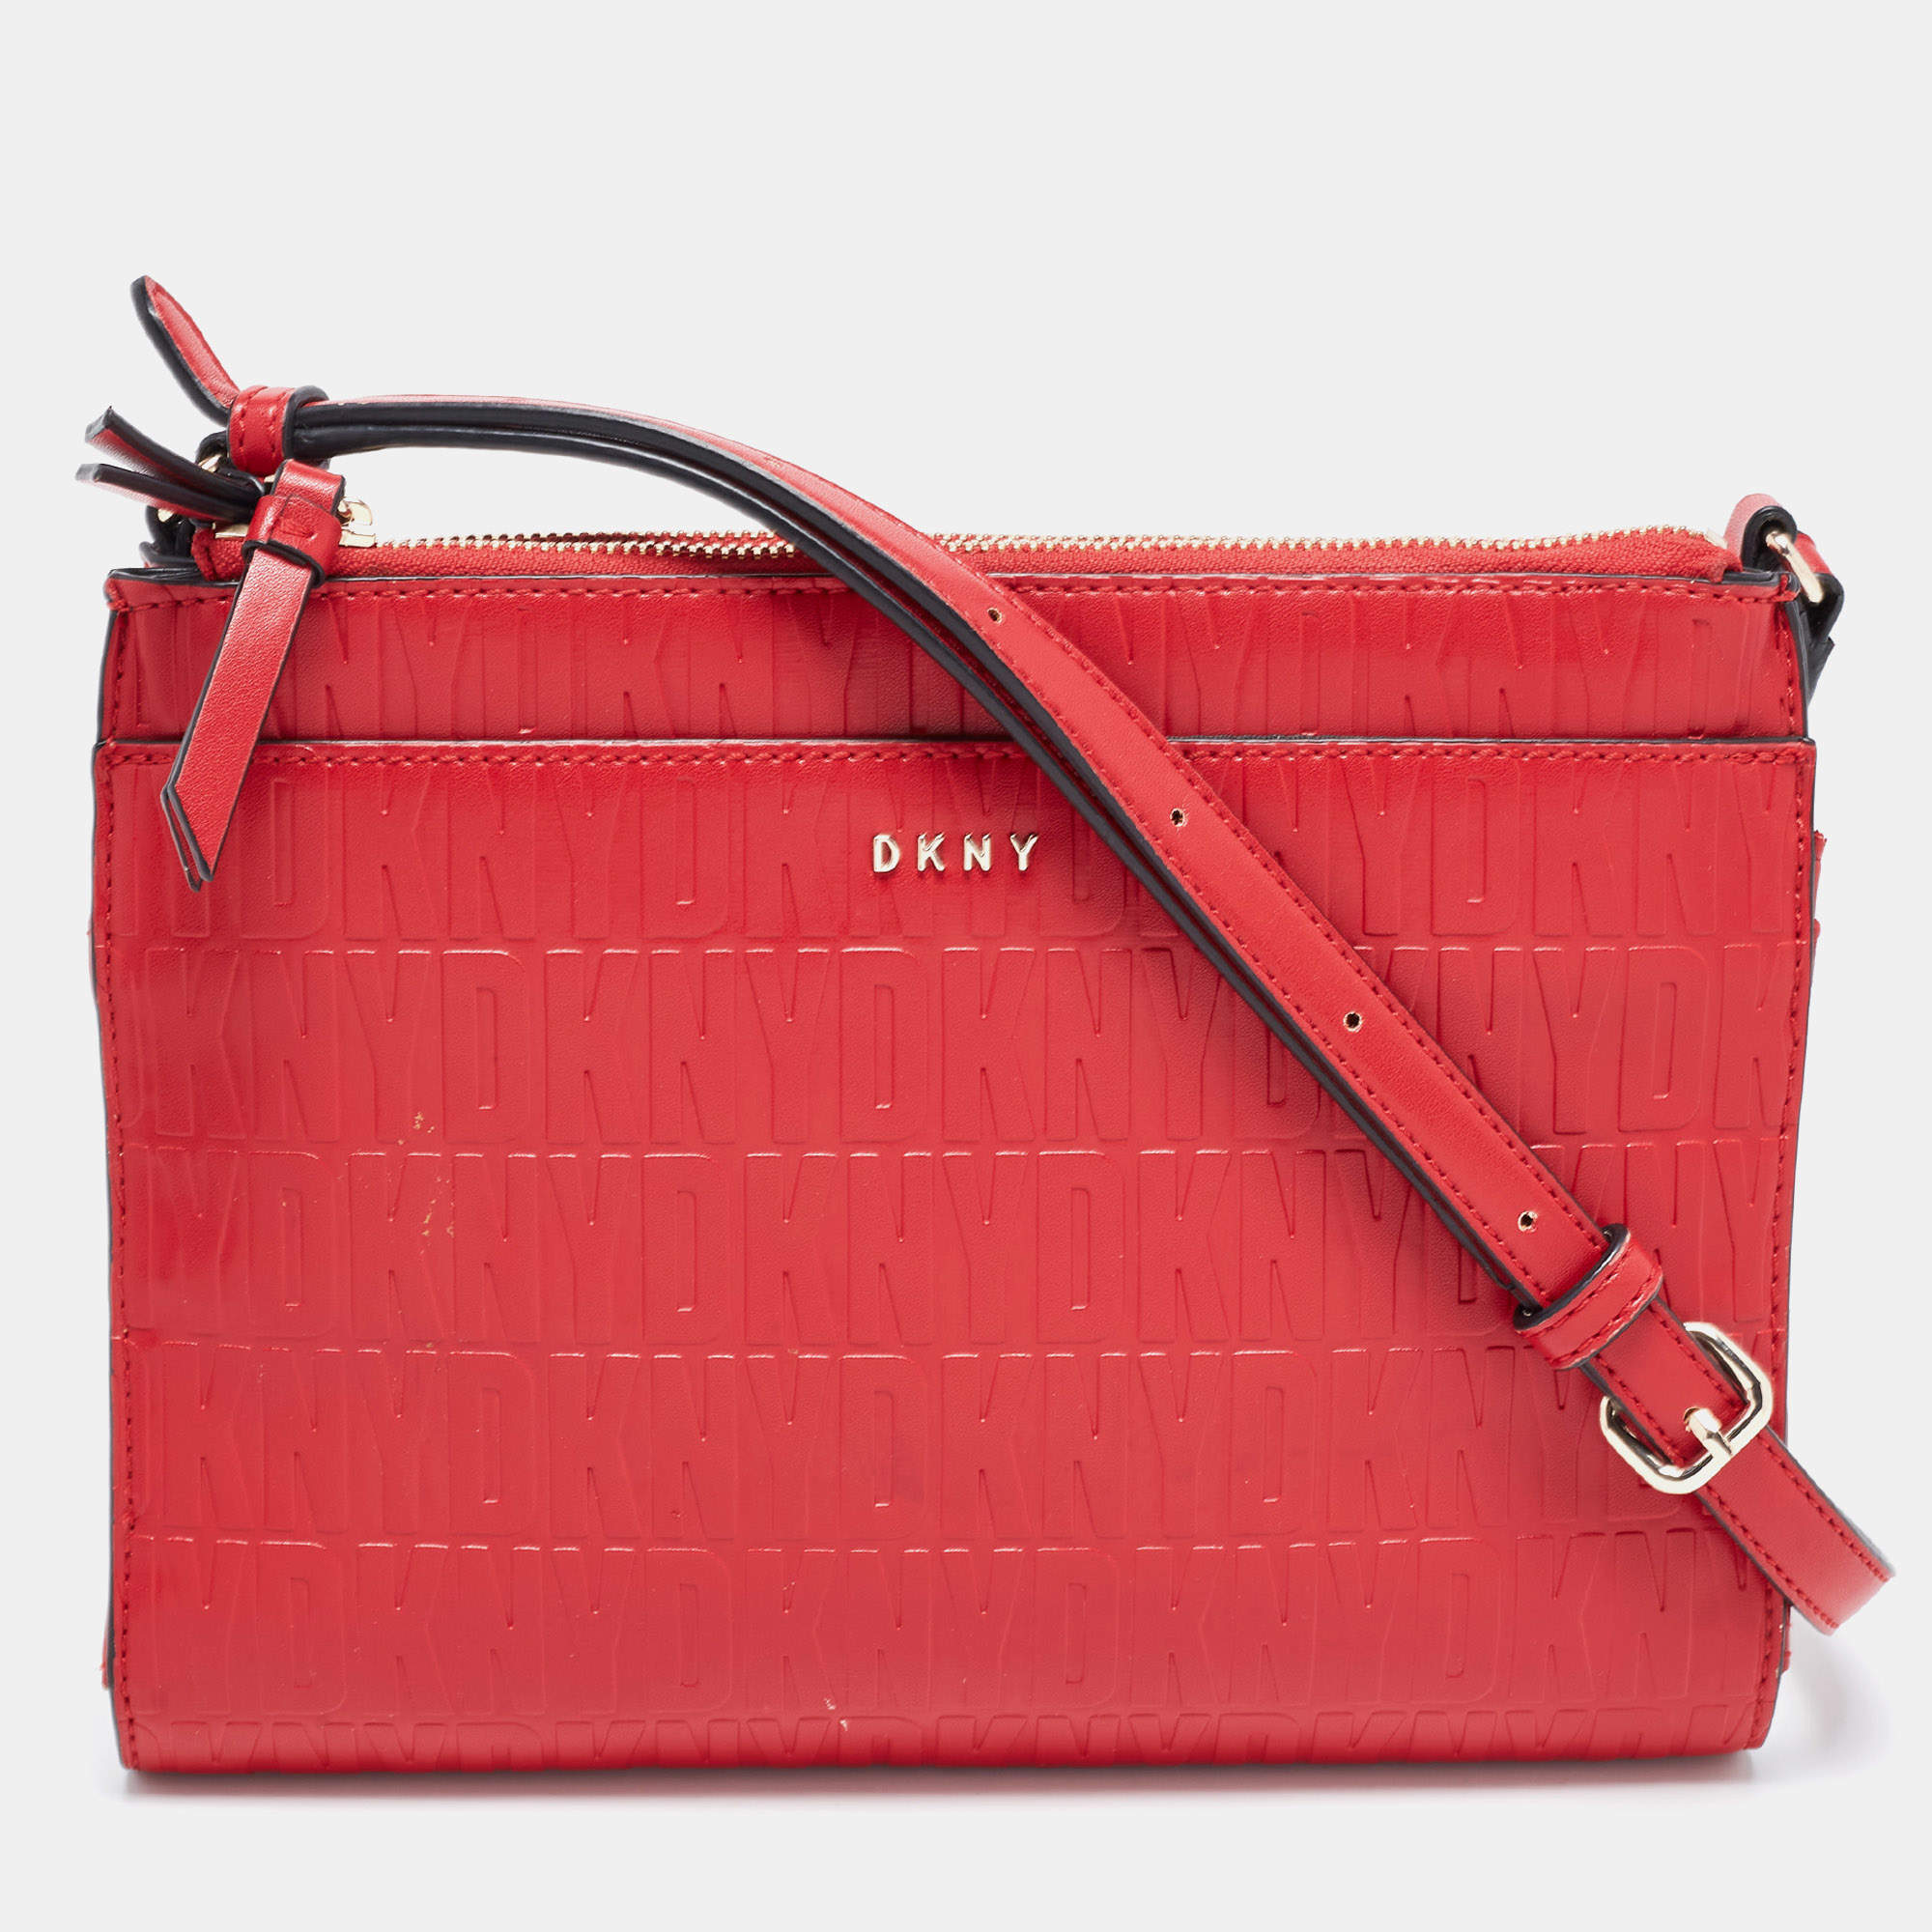 DKNY Women's Bryant Sutton Camera Bag - Bright Red | TheHut.com